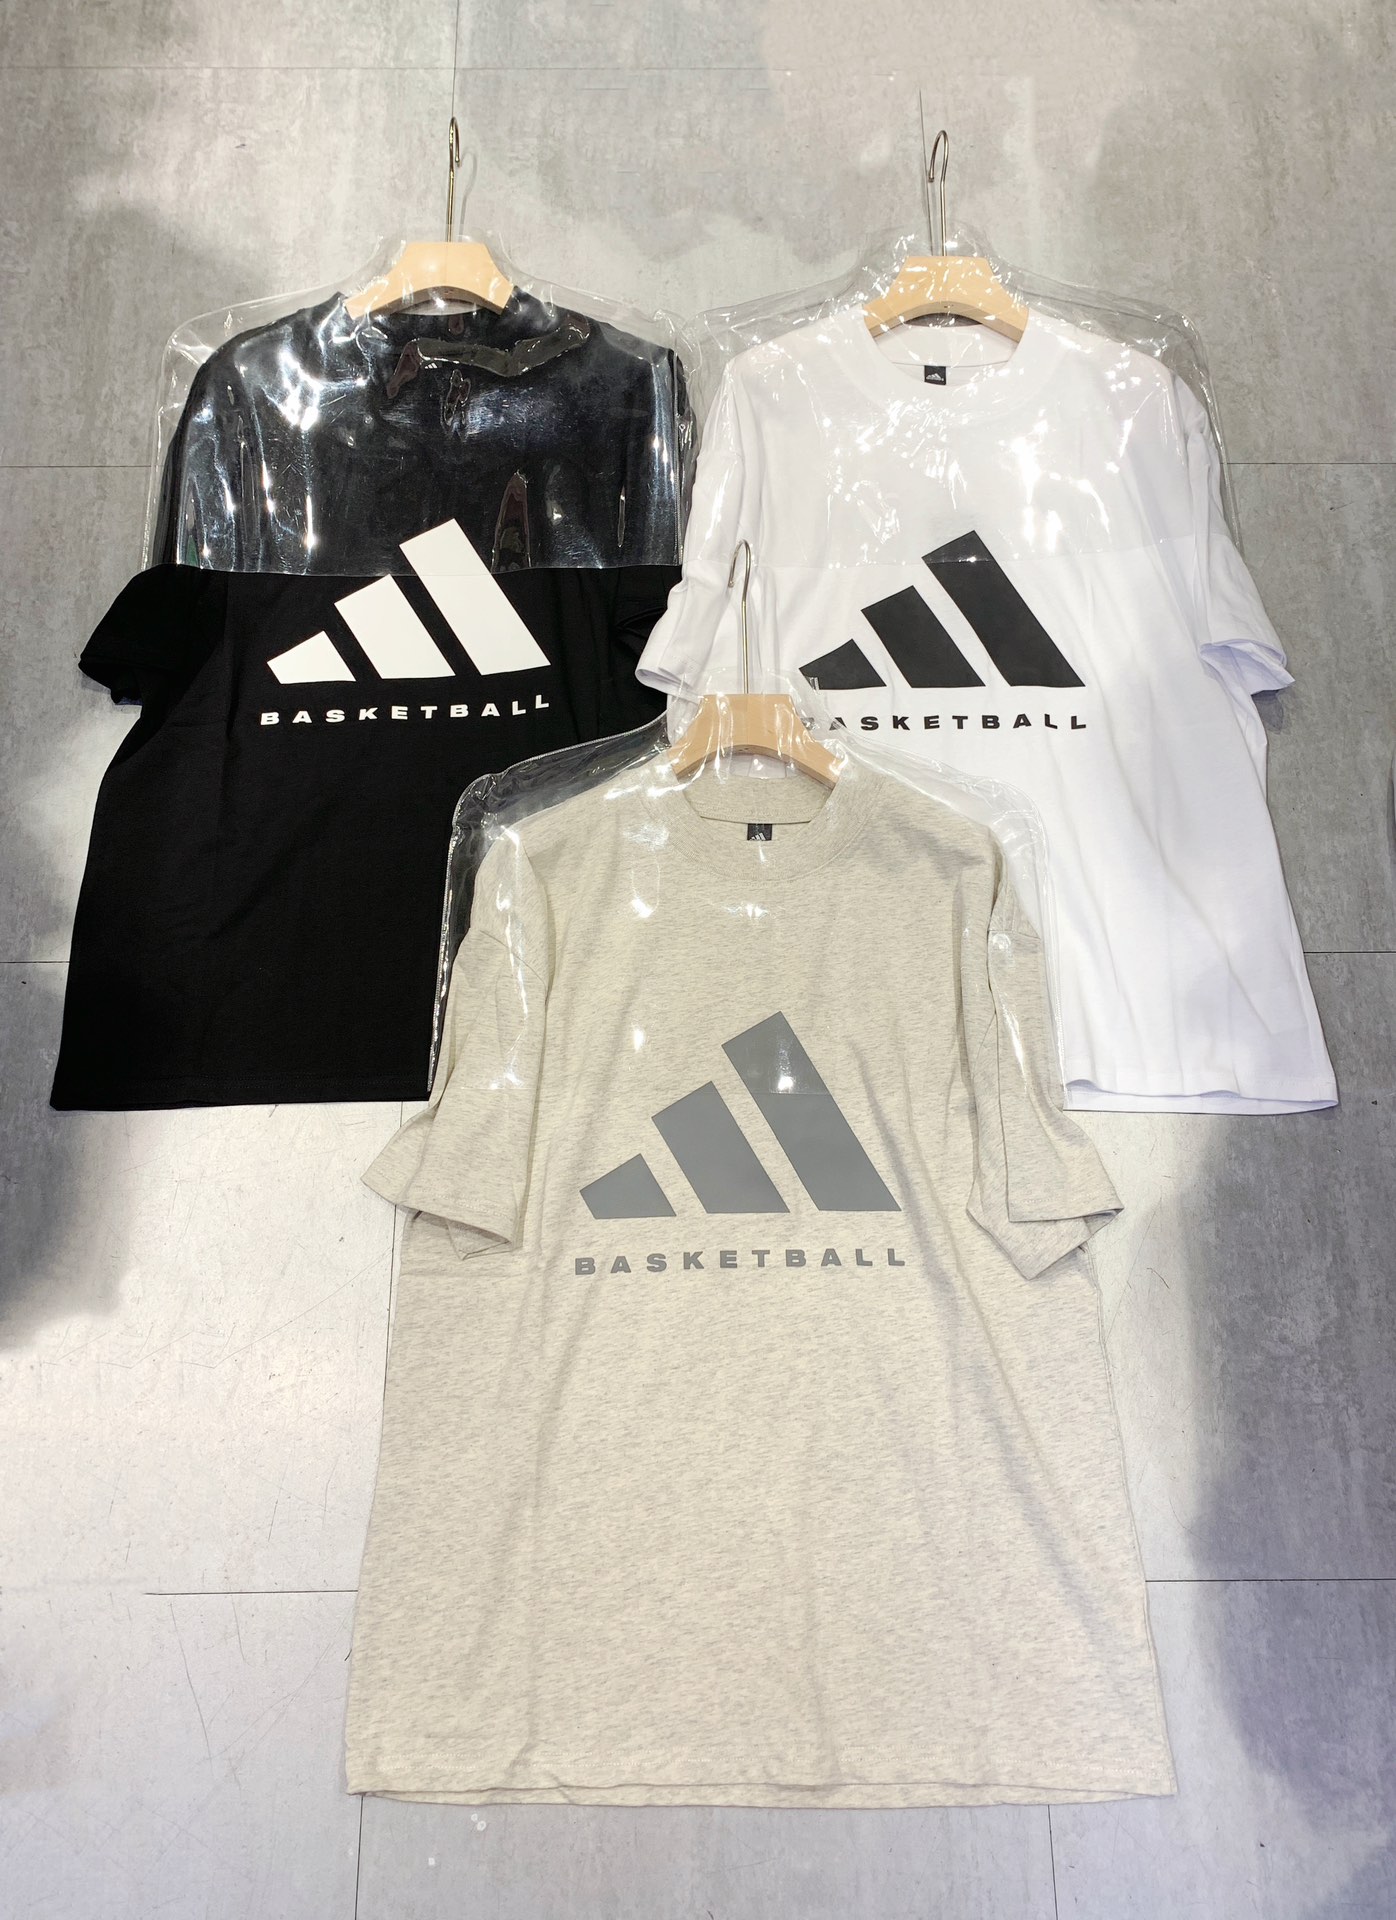 Adidas阿迪达斯BASKETBA联名限定款T恤颜色:黑色 白色 灰色Size:S M L